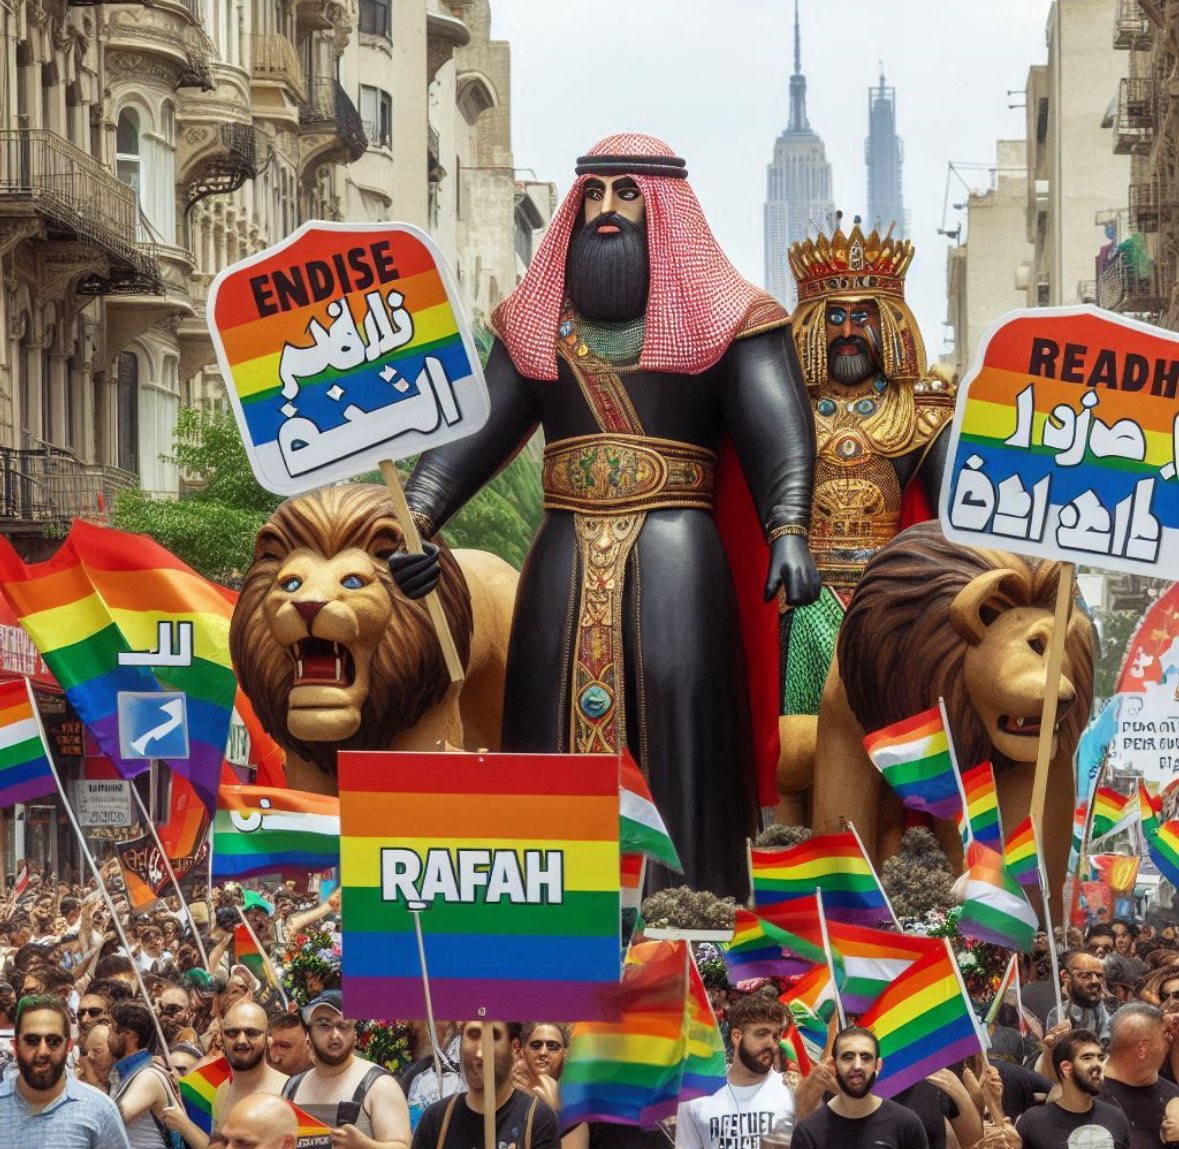 who’s coming to the Rafah Pride parade next saturday! i wanna meet more gay trans palestinians!